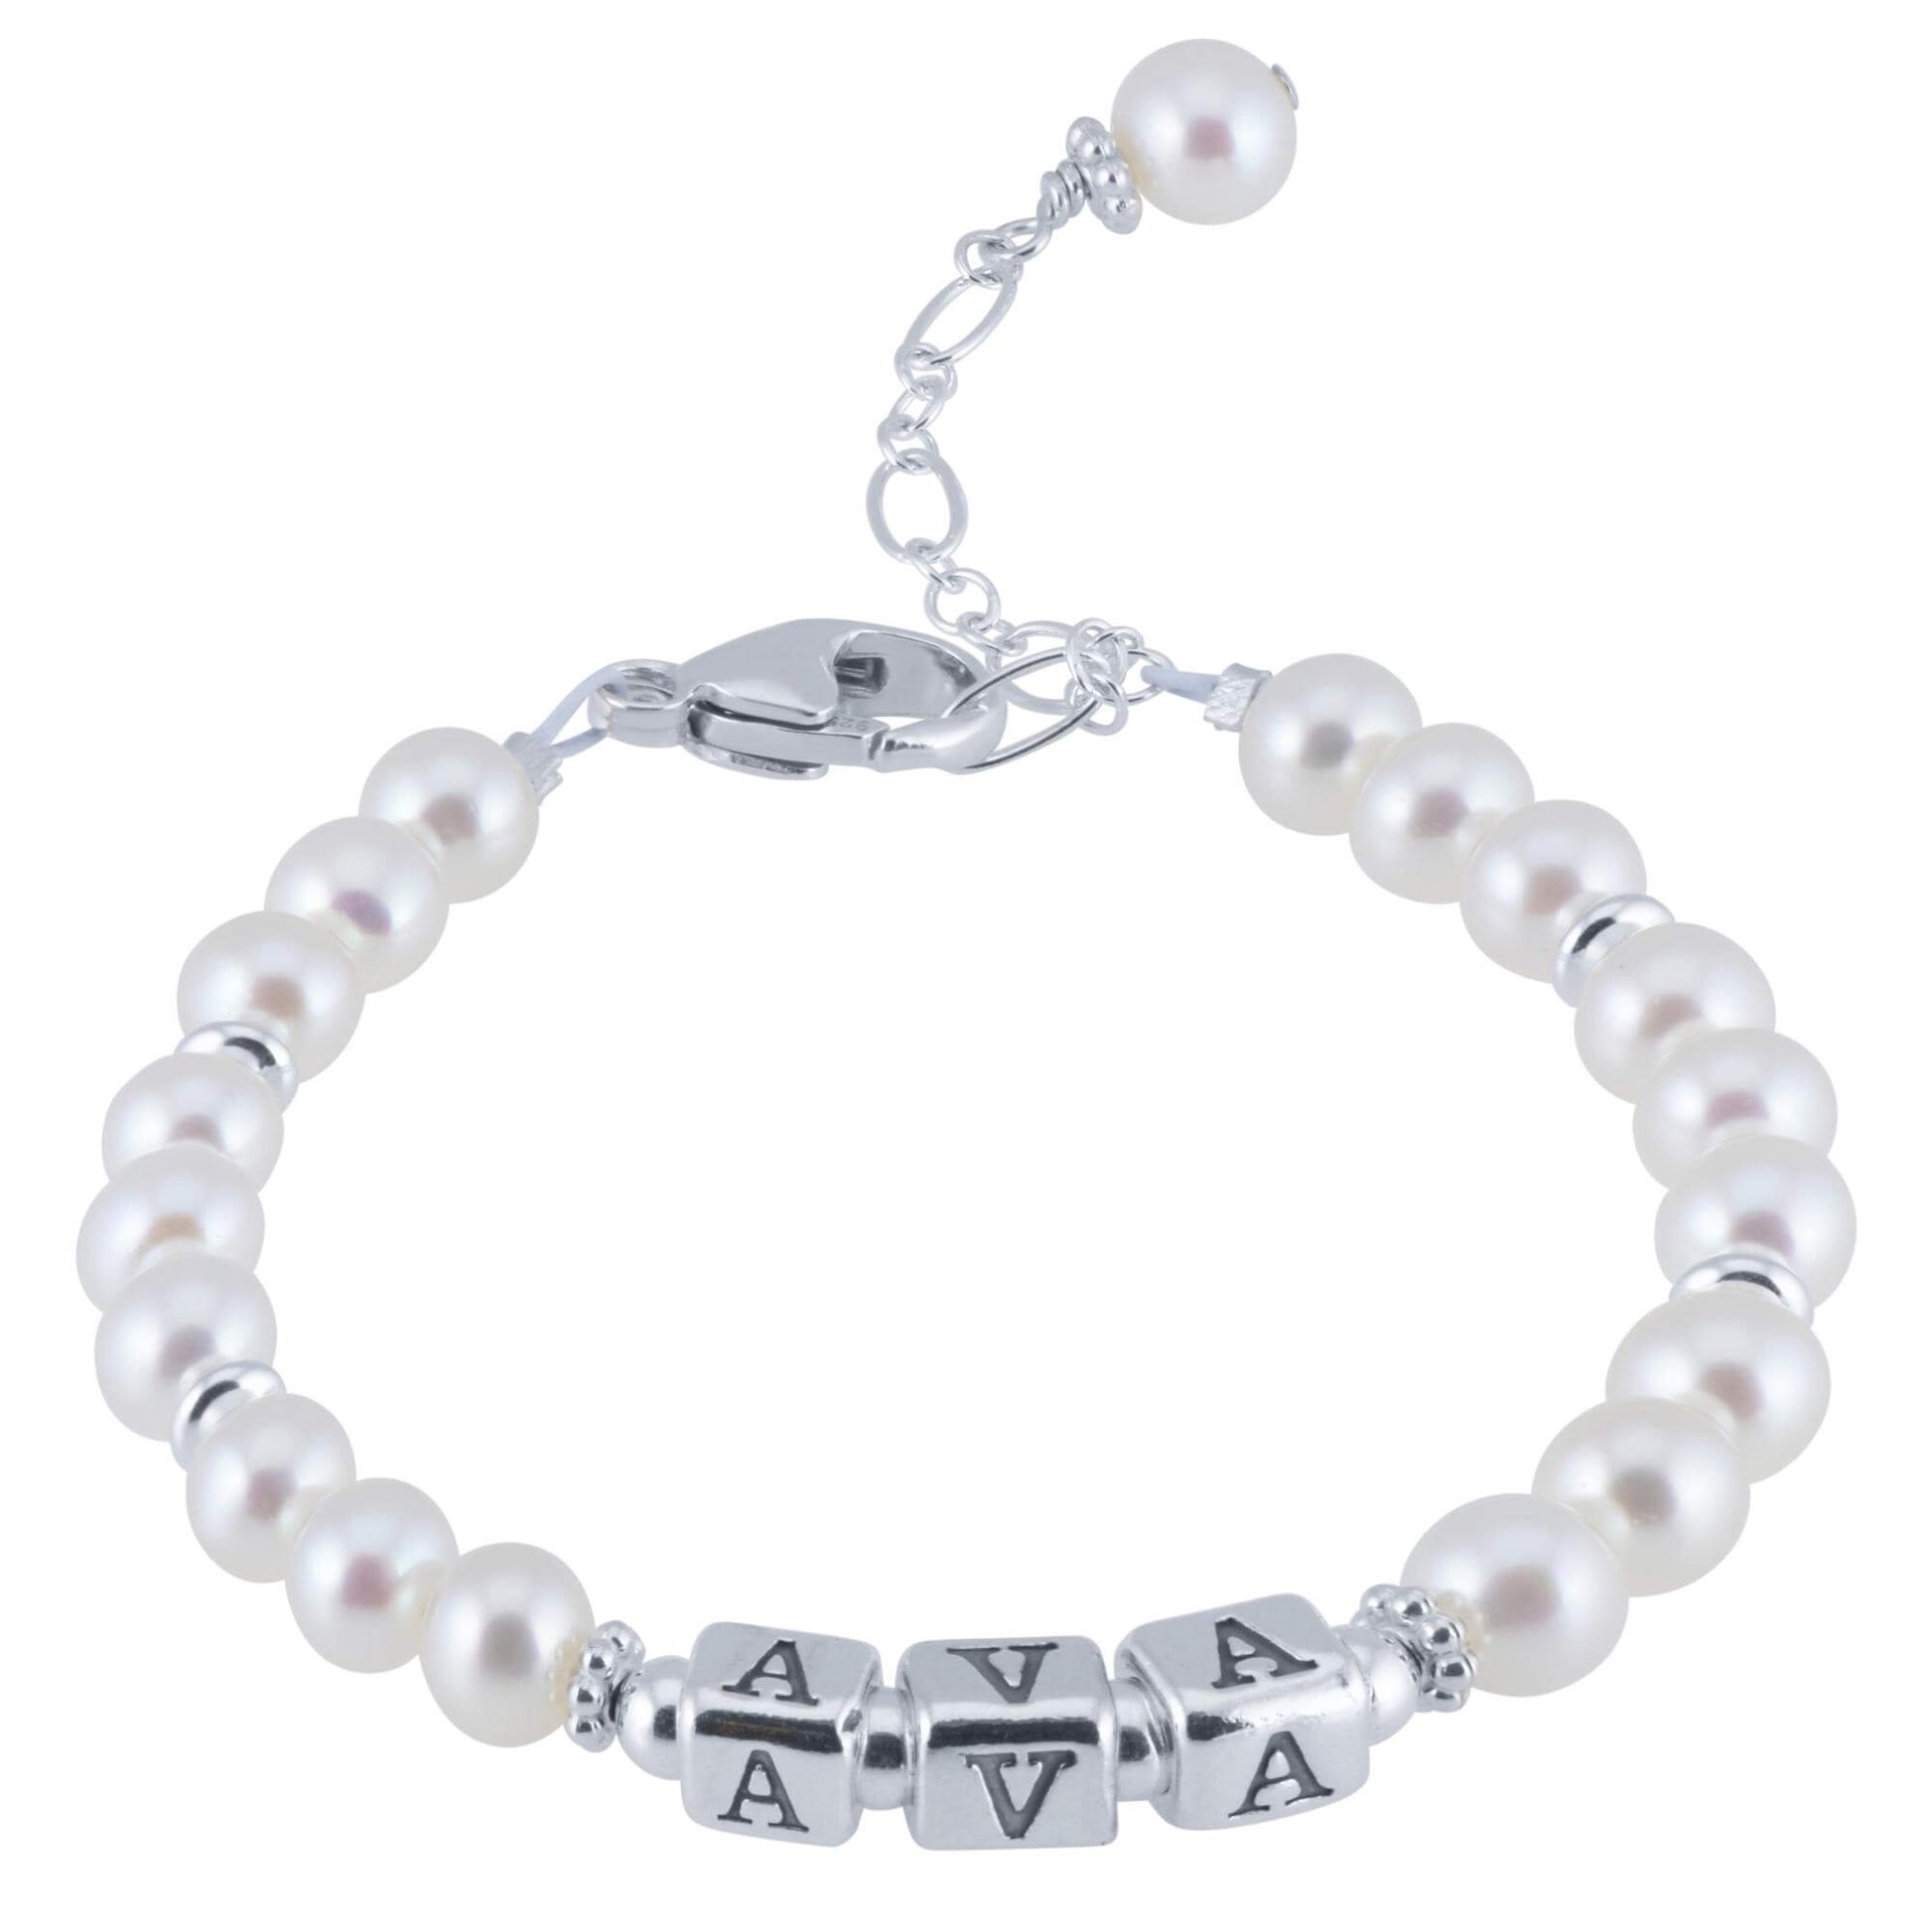 Girls Dainty Name Bracelet - The Vintage Pearl